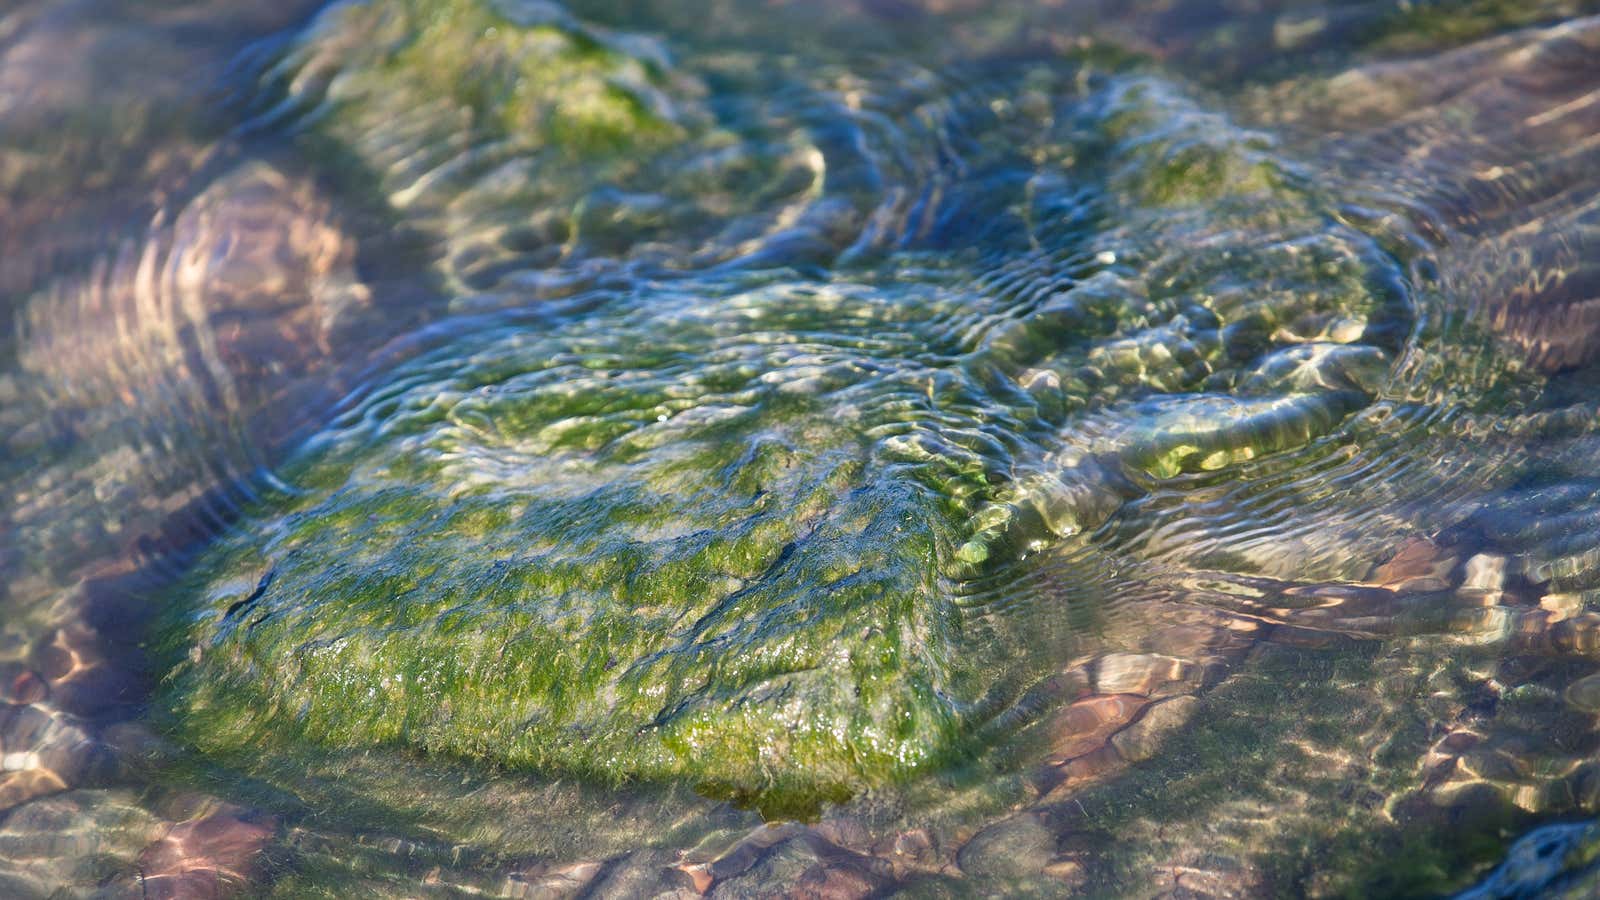 A toxic algae outbreak is invading the Ohio River.